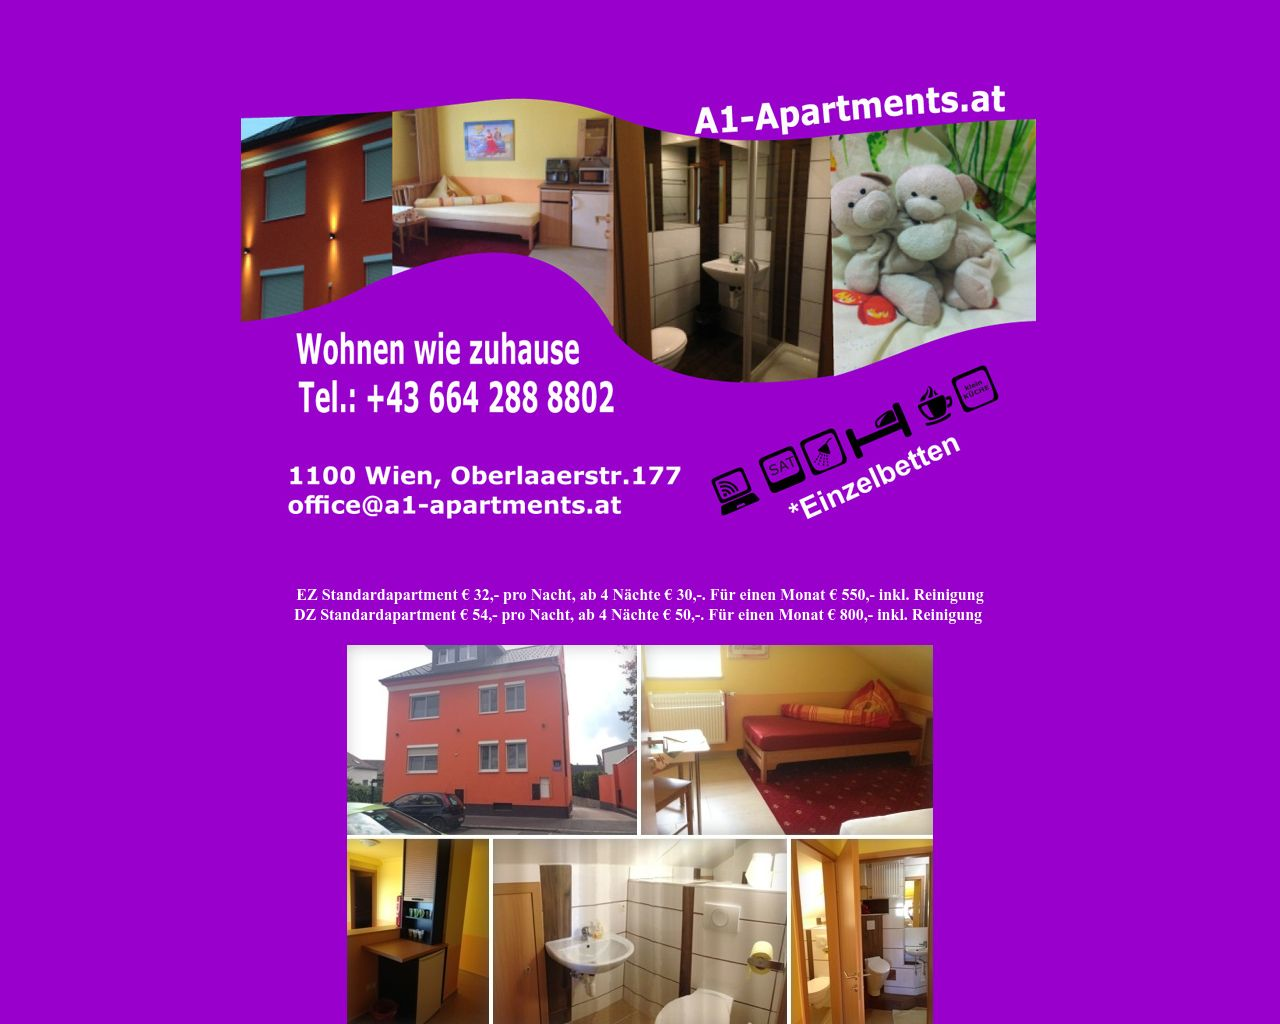 Bild Website a1-apartment.at in 1280x1024